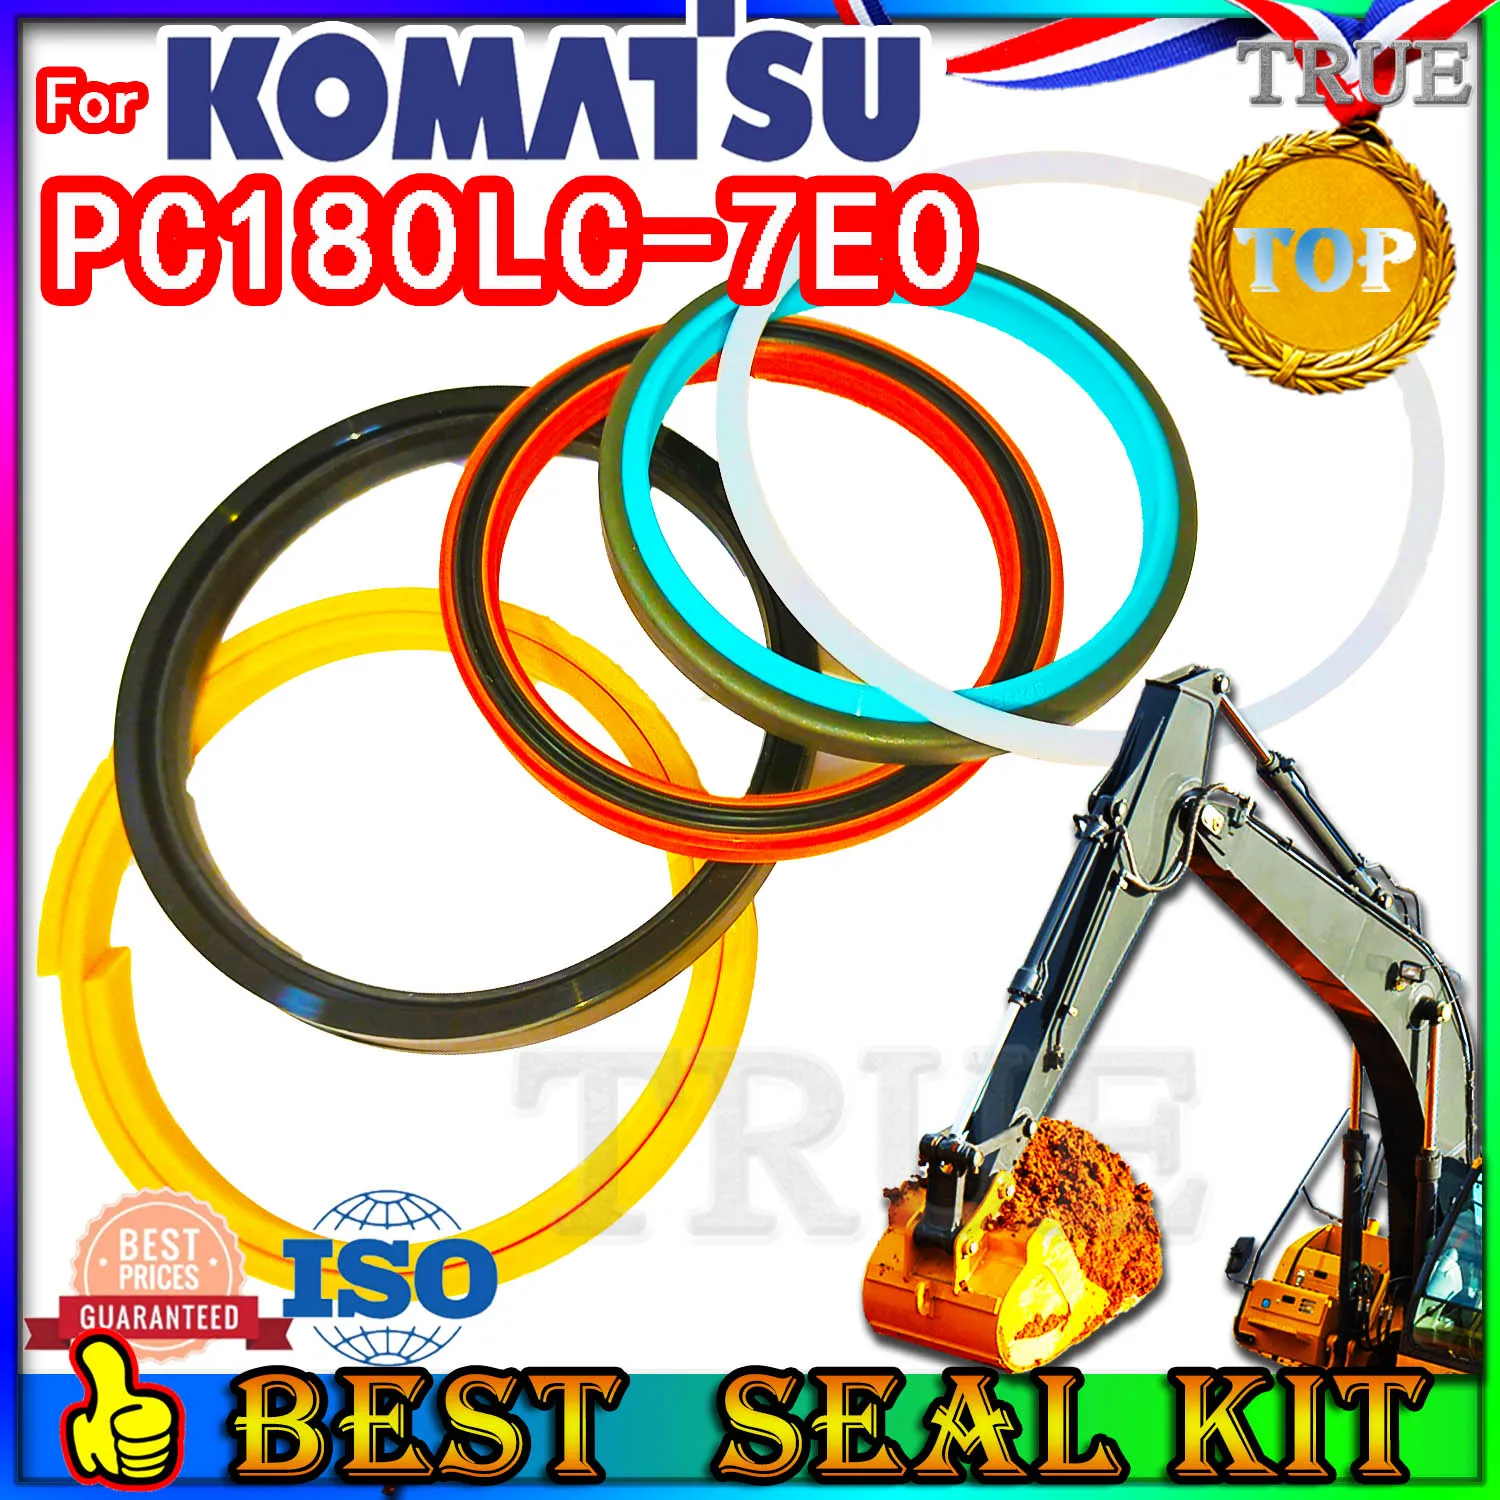 

For KOMATSU PC180LC-7E0 Oil Seal Repair Kit Boom Arm Bucket Excavator Hydraulic Cylinder PC180LC 7E0 Breaker Steering type Main